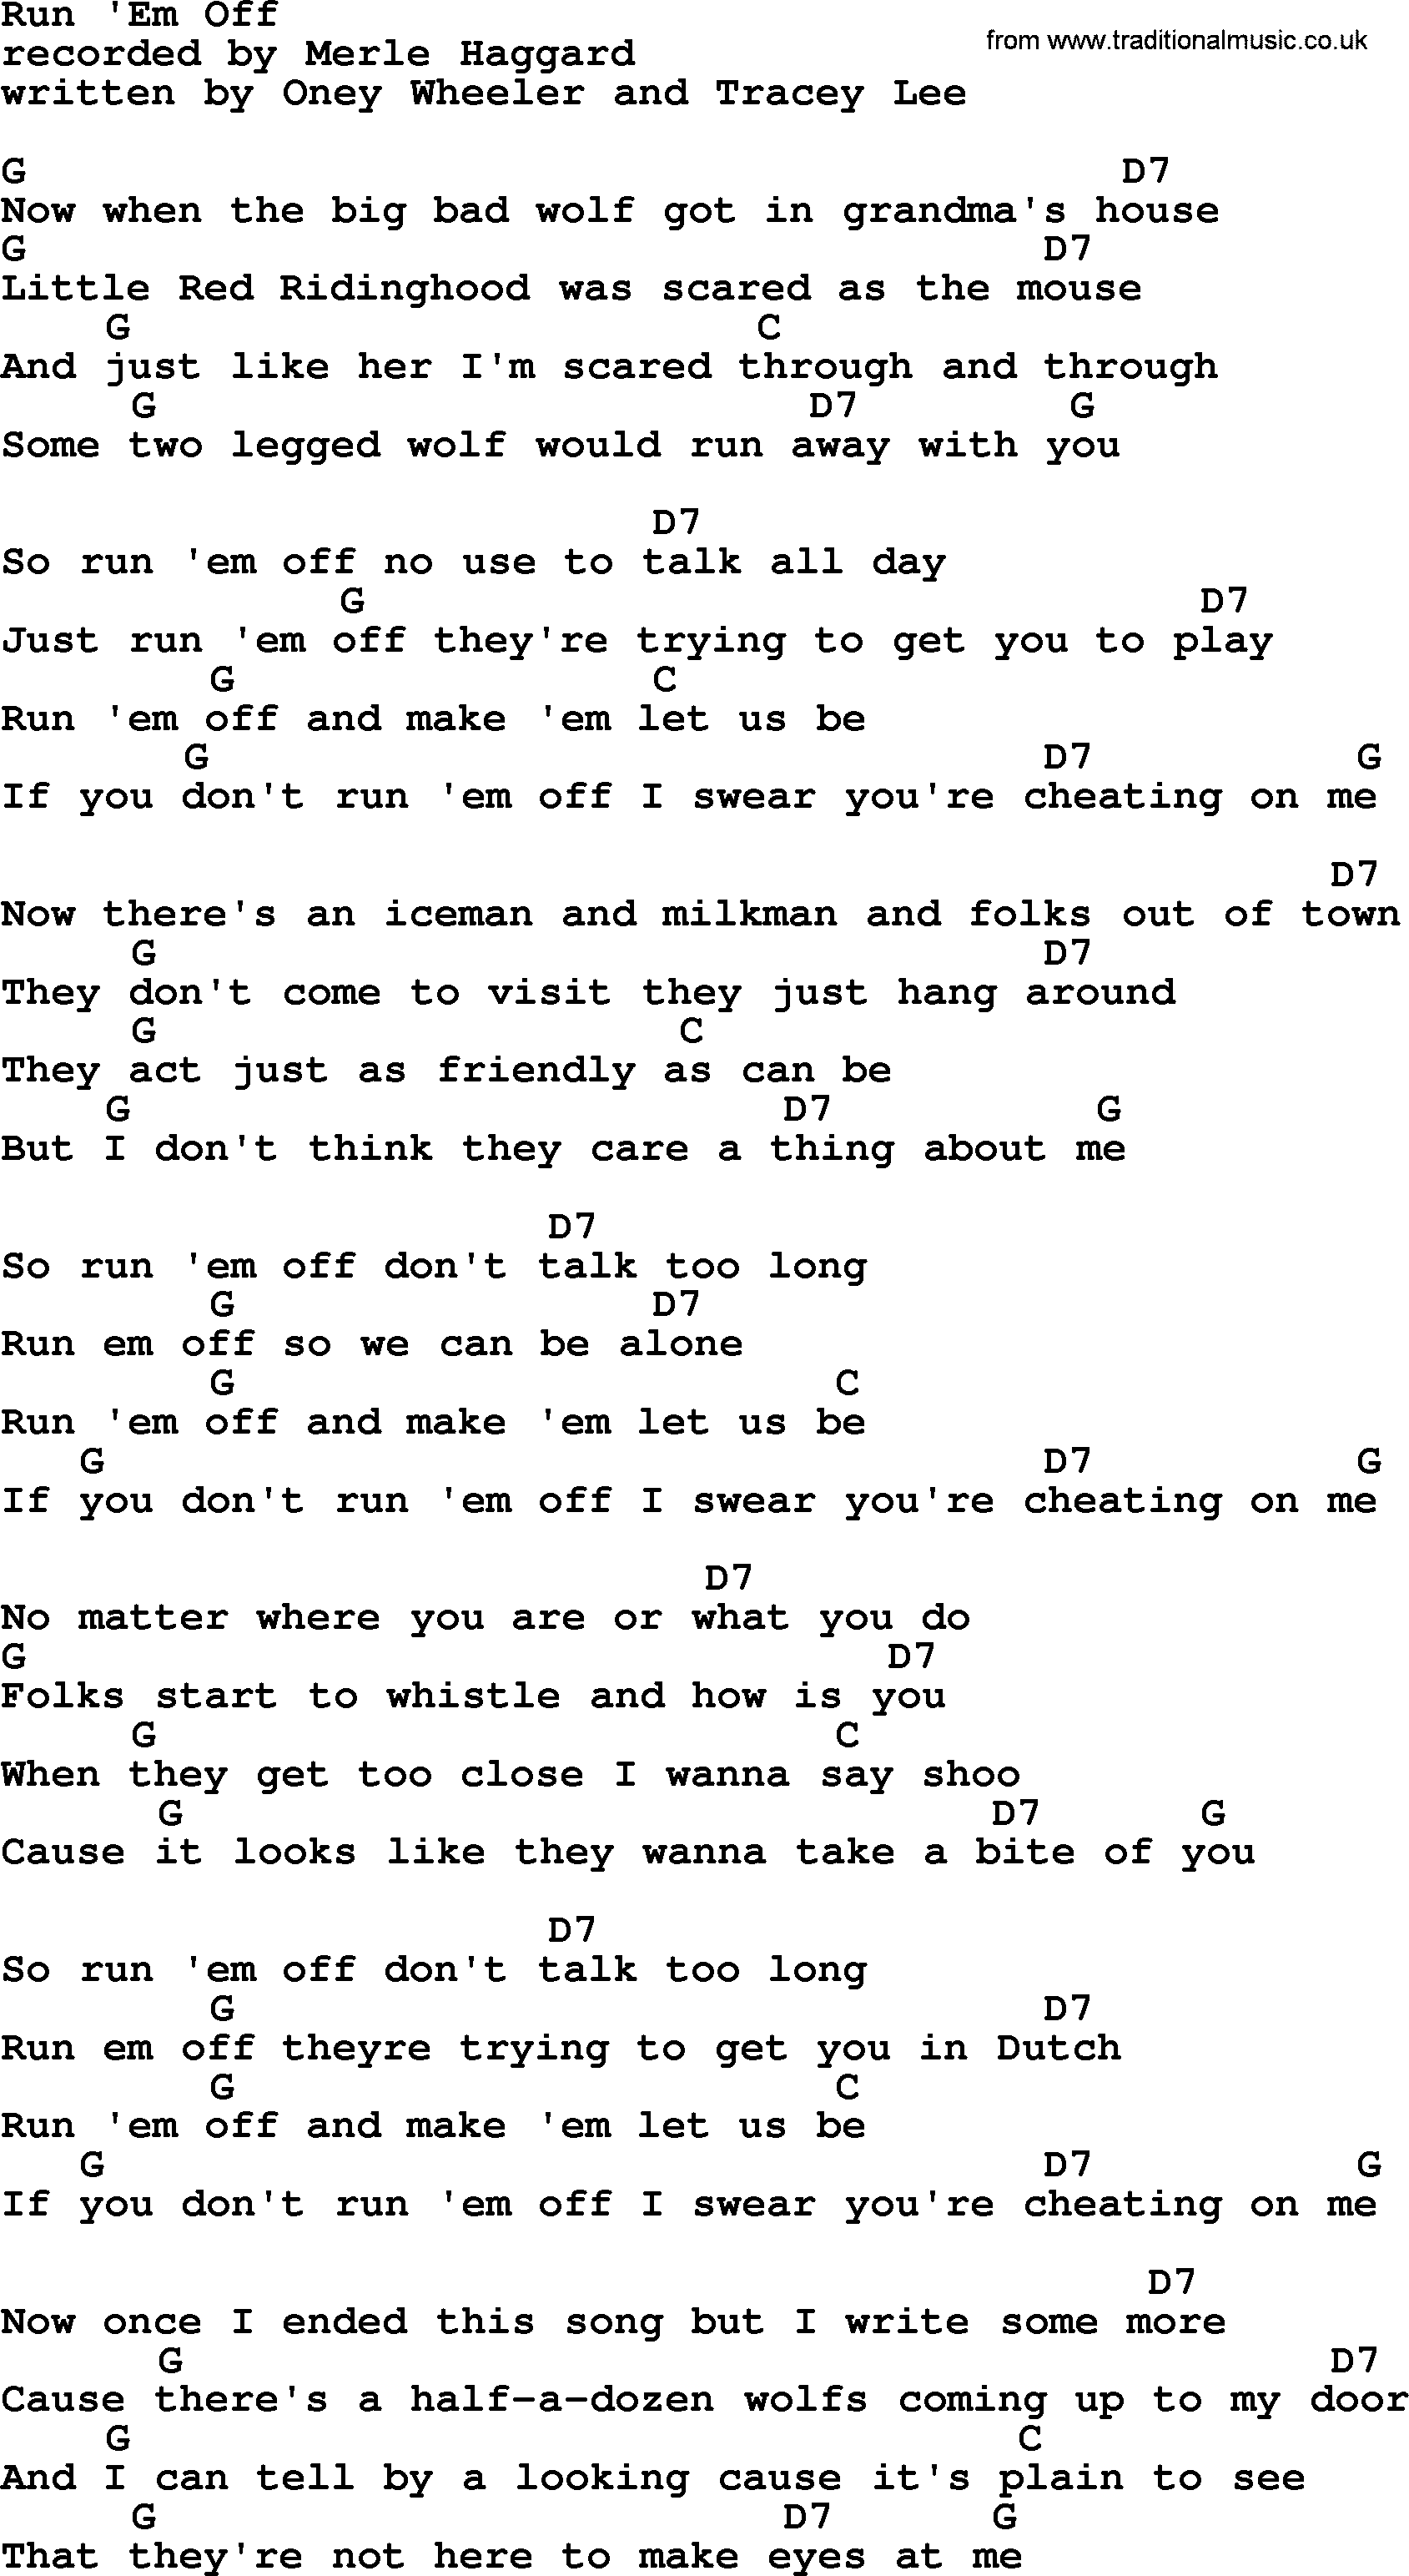 Merle Haggard song: Run 'Em Off, lyrics and chords